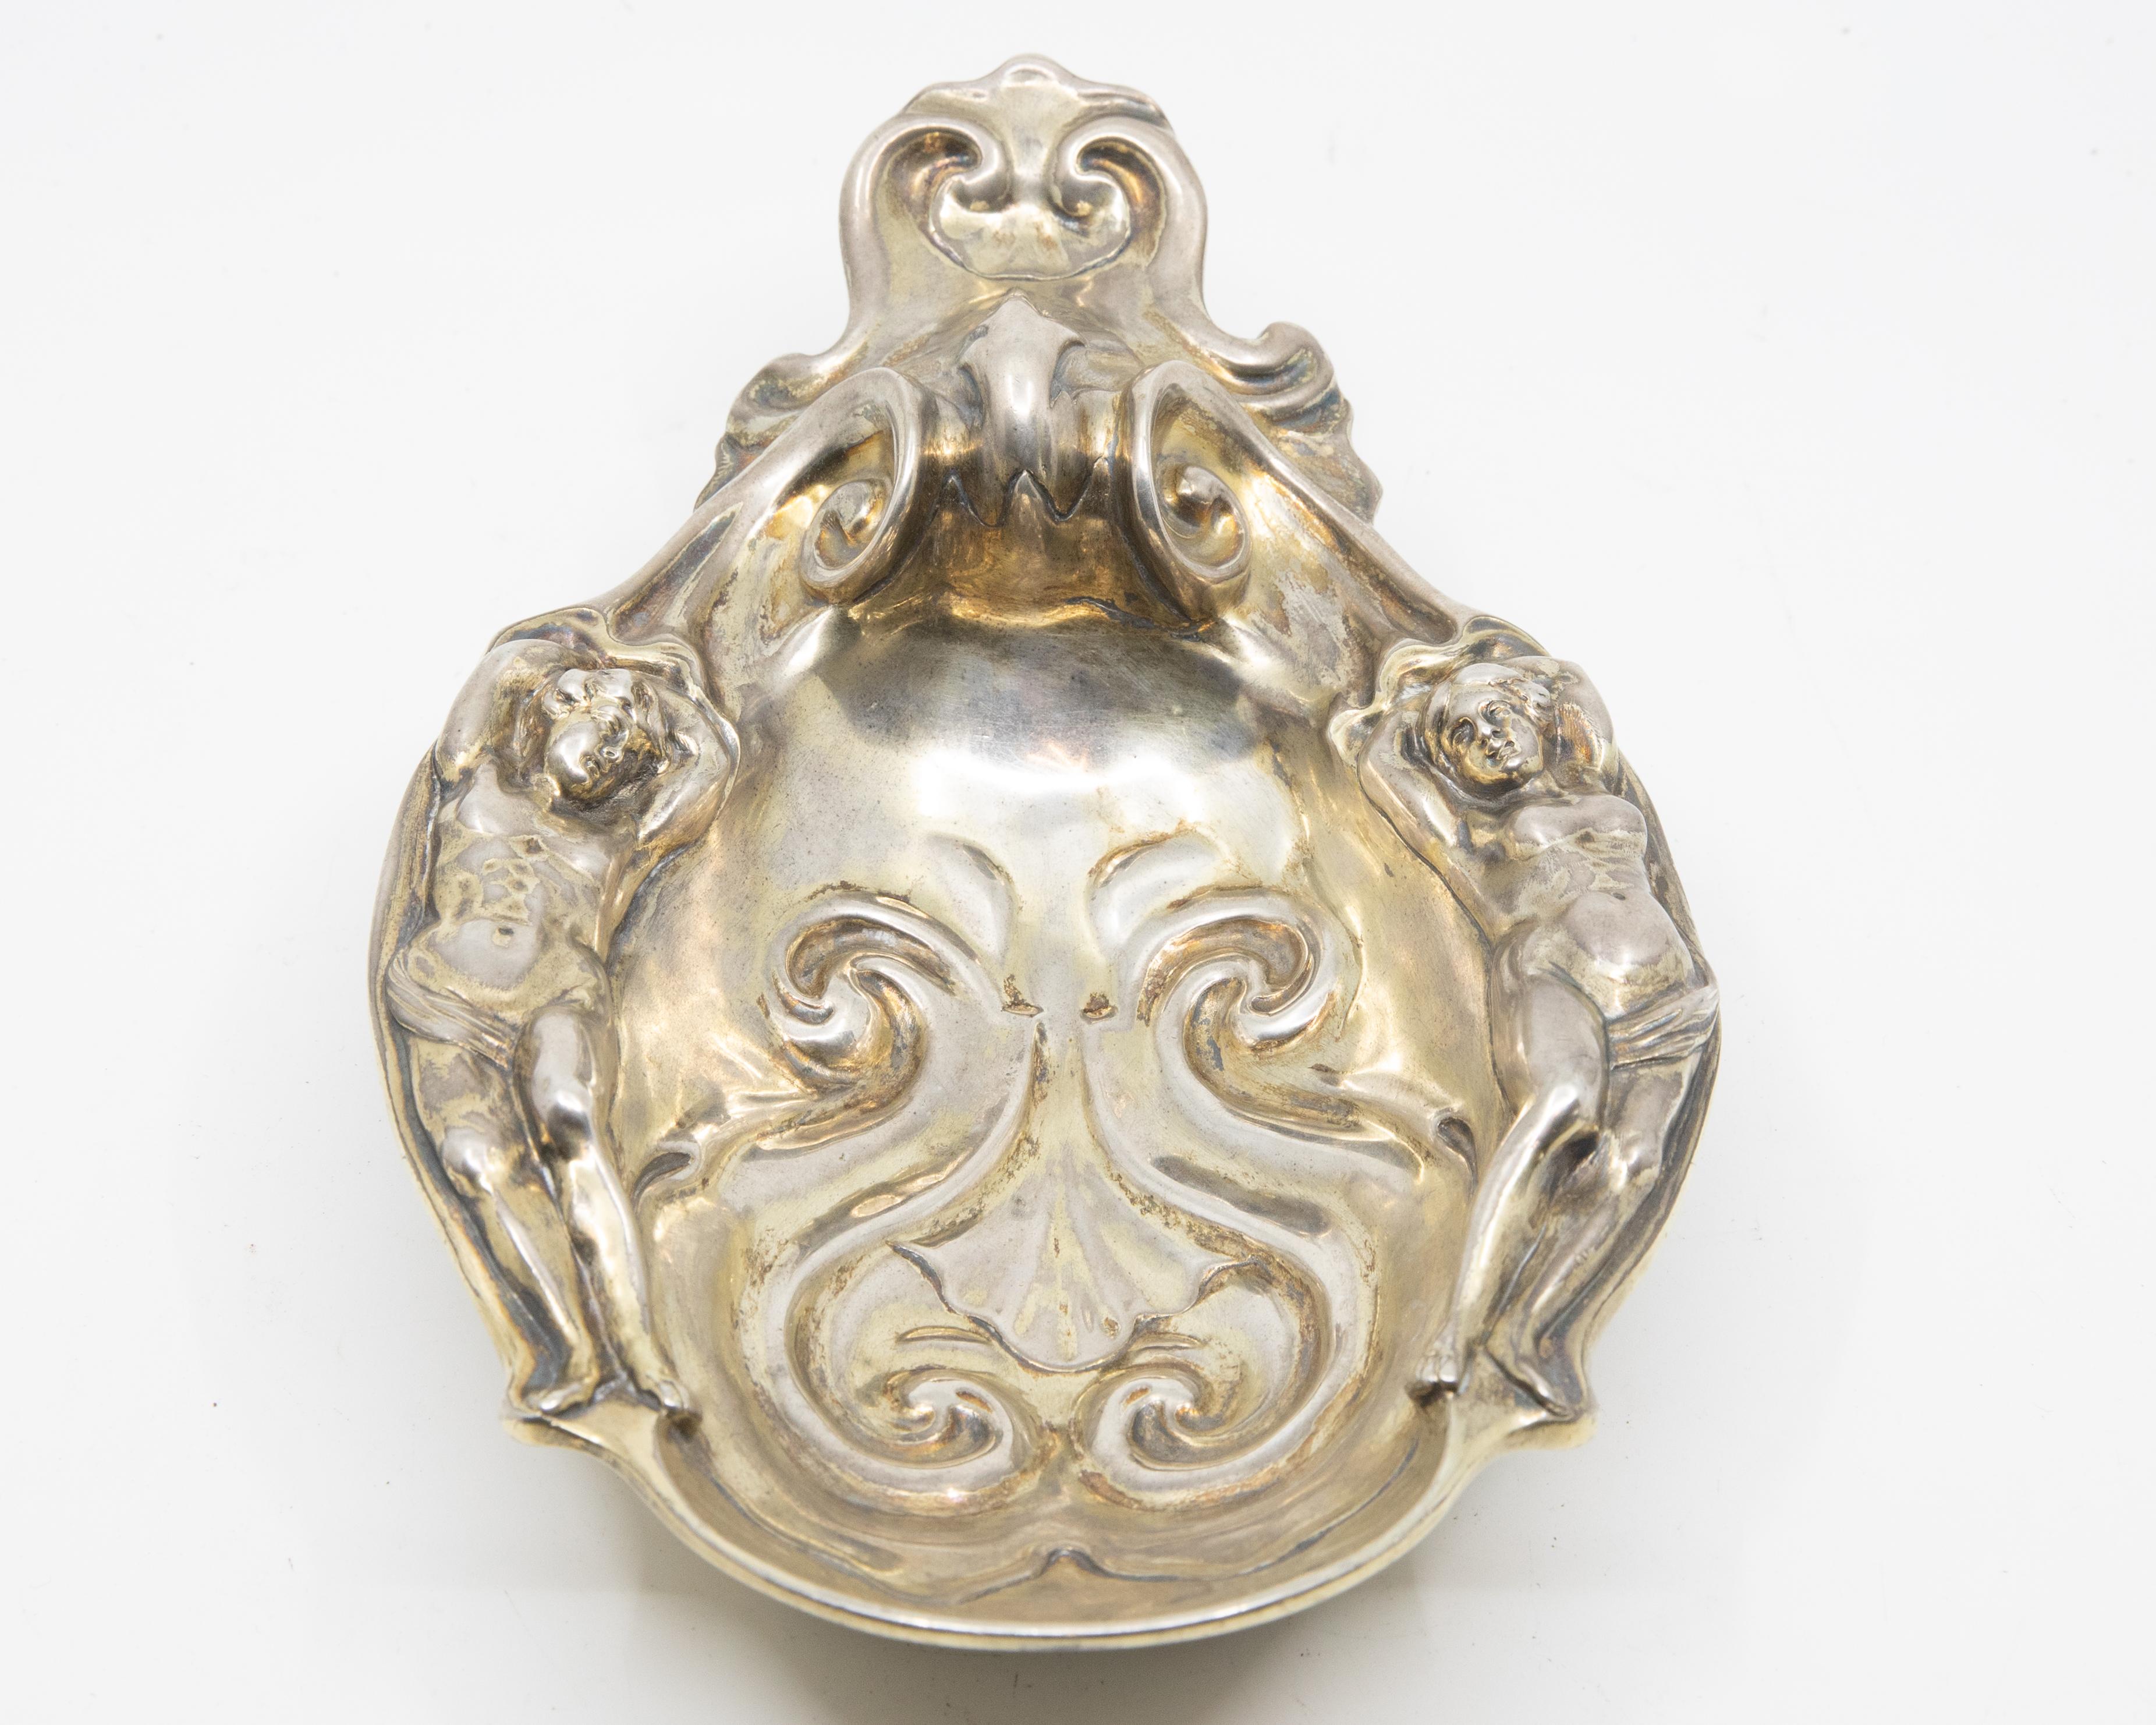 19th Century Robert Garrard Figural Renaissance Revival Decorated Sterling Silver Dish